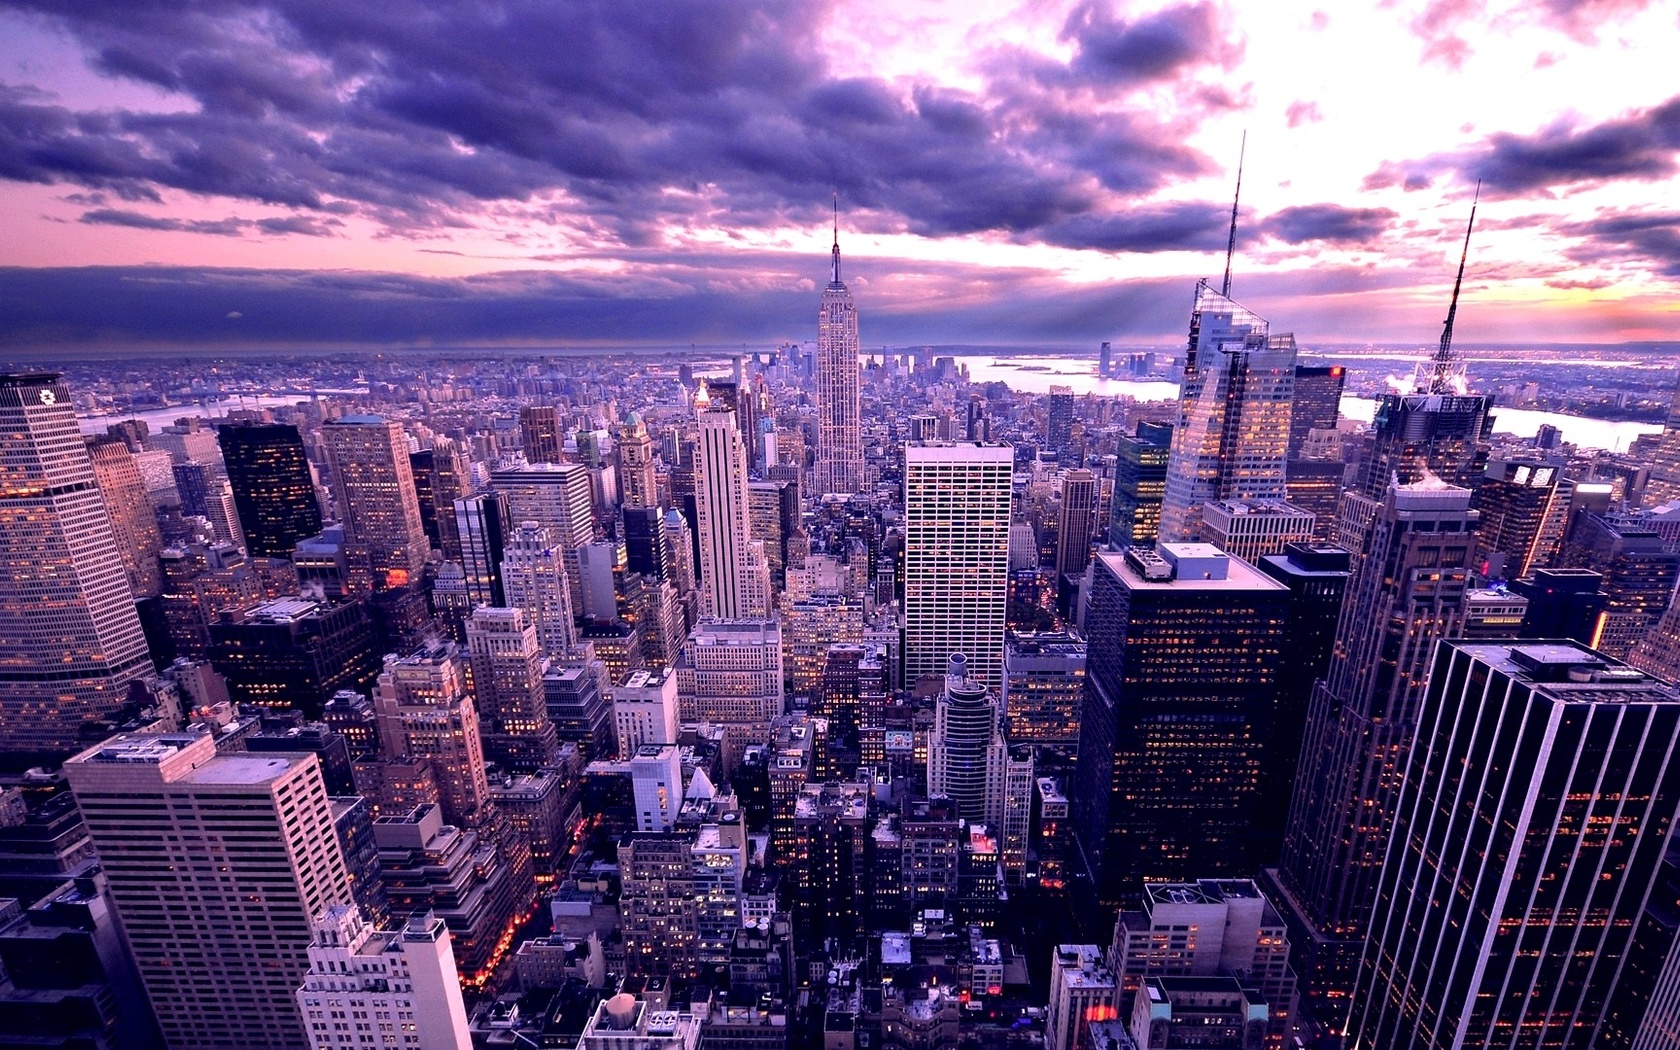 new york, usa, building, city, bigapple